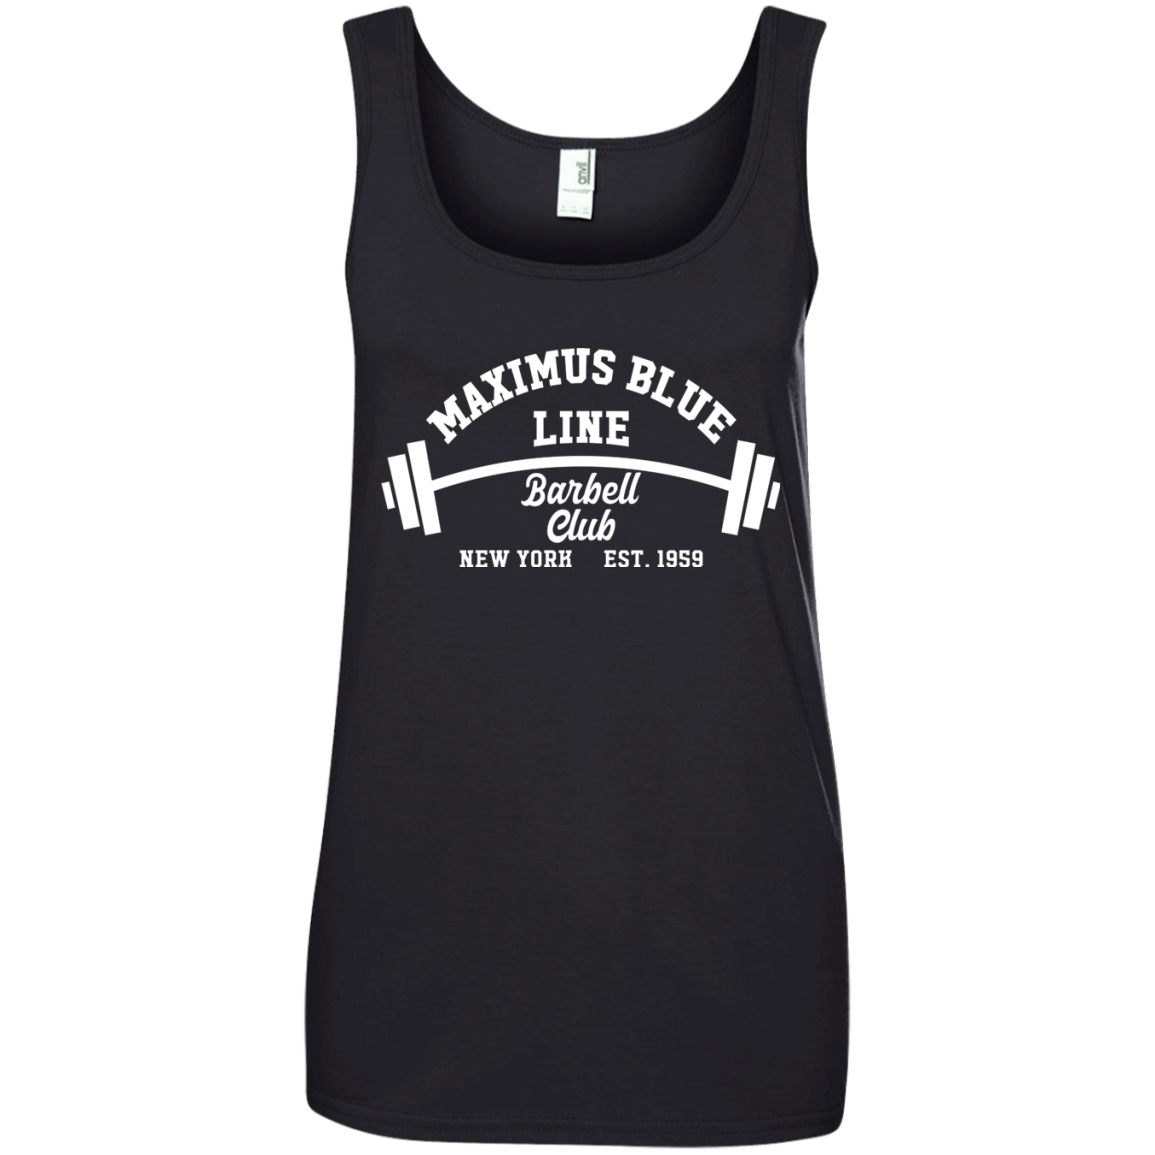 Maximus Blue Line Barbell Club Ladies Ringspun Cotton Tank Top